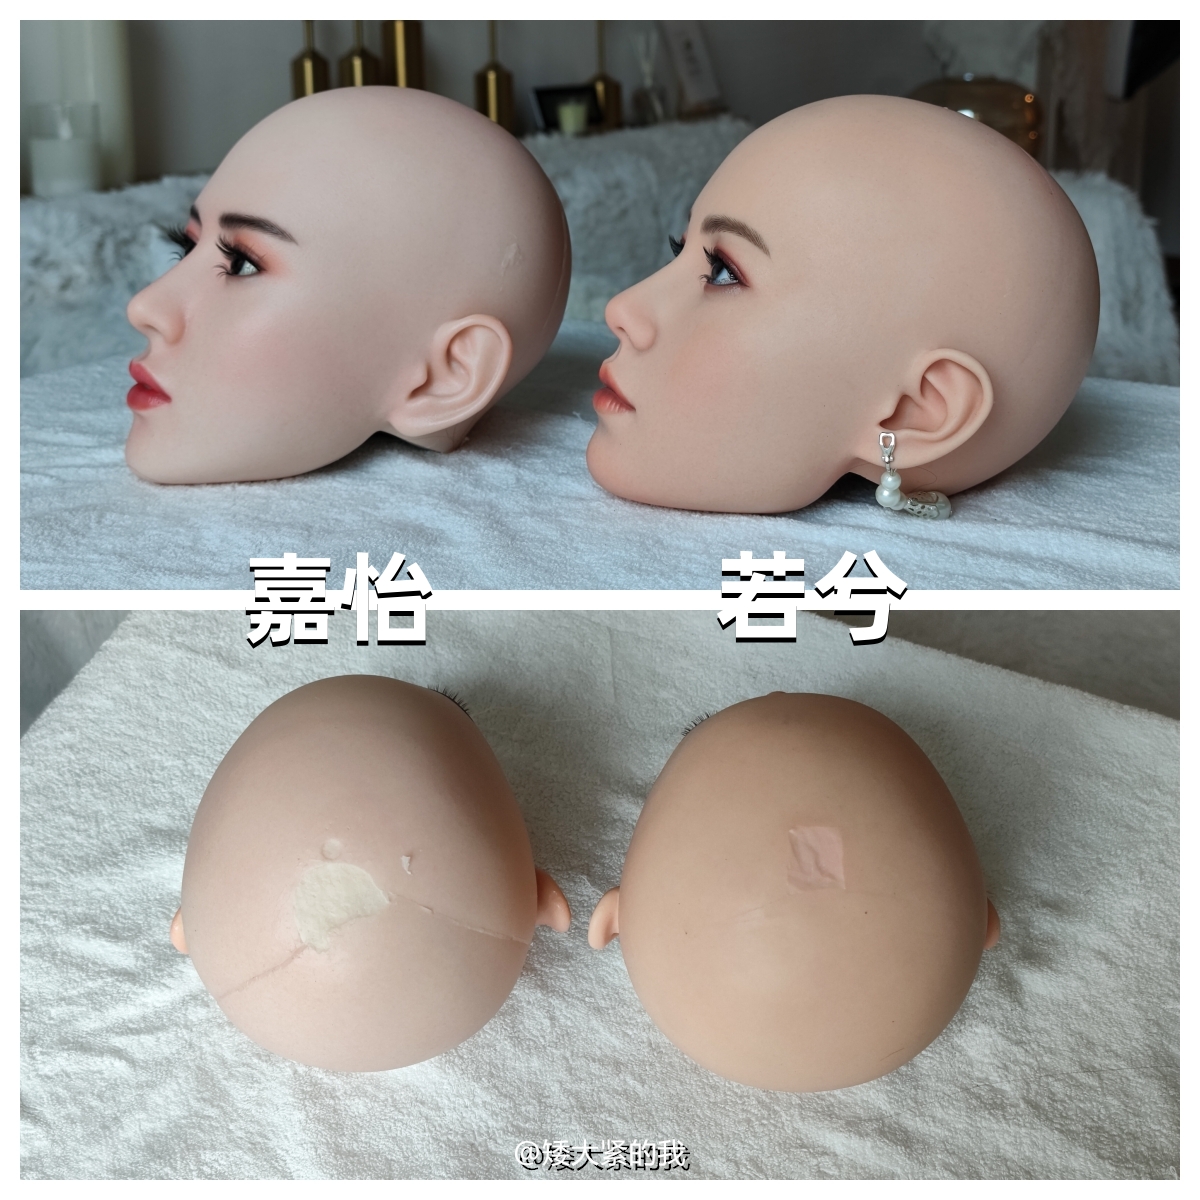 Gynoid Doll RZR|Realistic Silicone Sex Doll|Light Shooting|Head Sculpture|Head Carving|3D Eyeball|Lisa|Lori|13R|Doll Skin